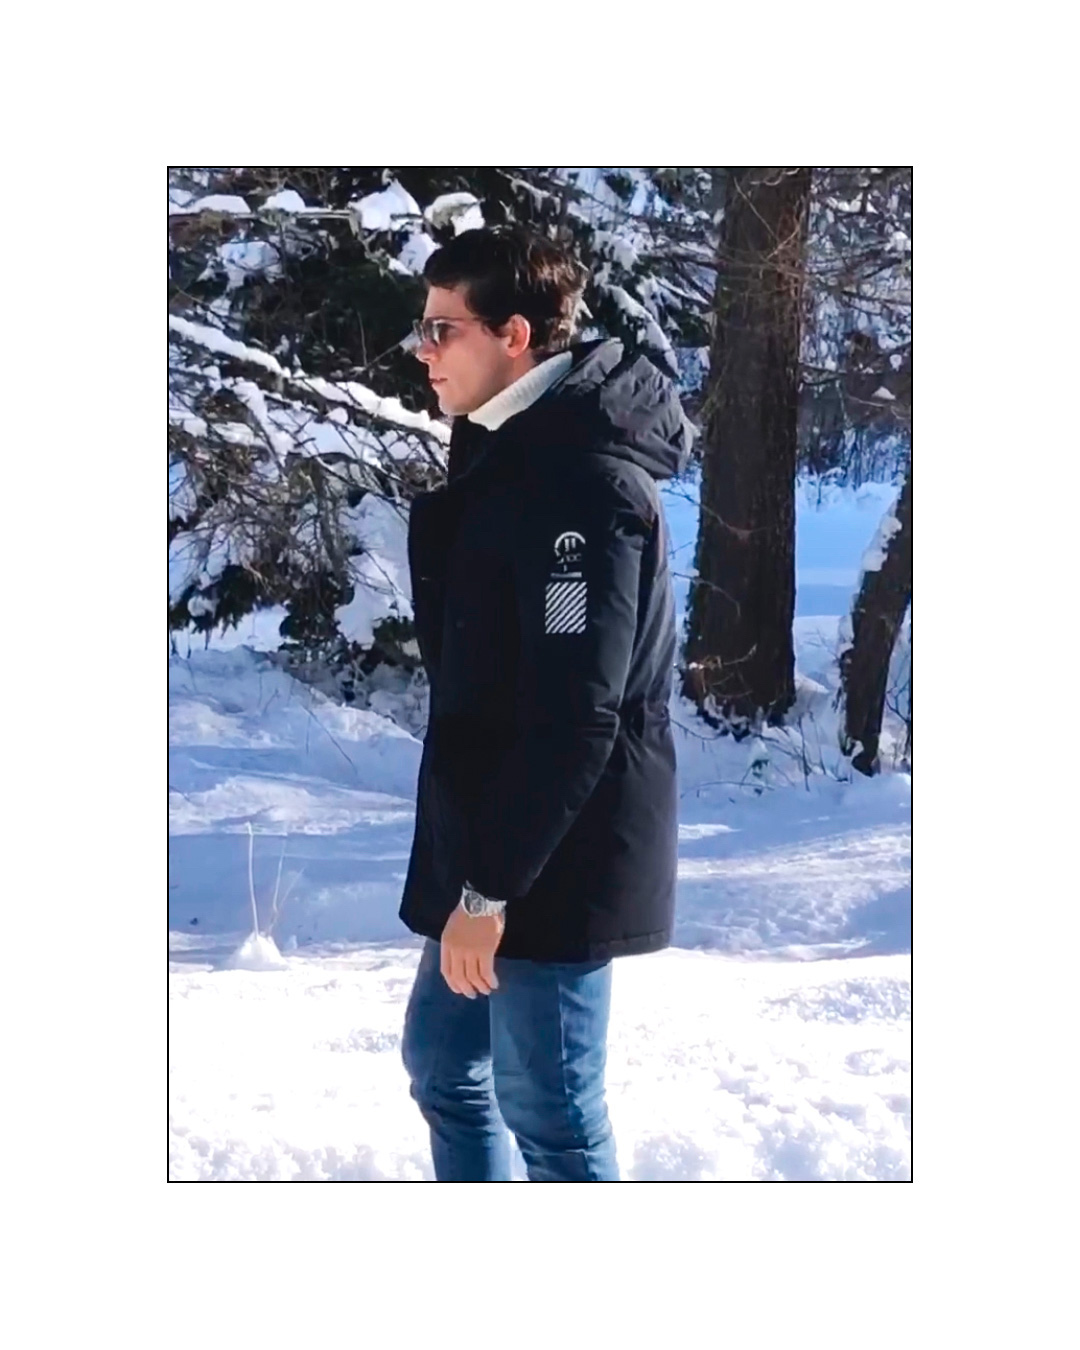 Adhoc - We are proud to dress @shatush_courmayeur this winter.

#adhoc #formovingpeople #alwaysreadytowear #shatush #courmayeur #shatushcourmayeur #courmayeurmontblanc #wear #winterseason #snow #mount...